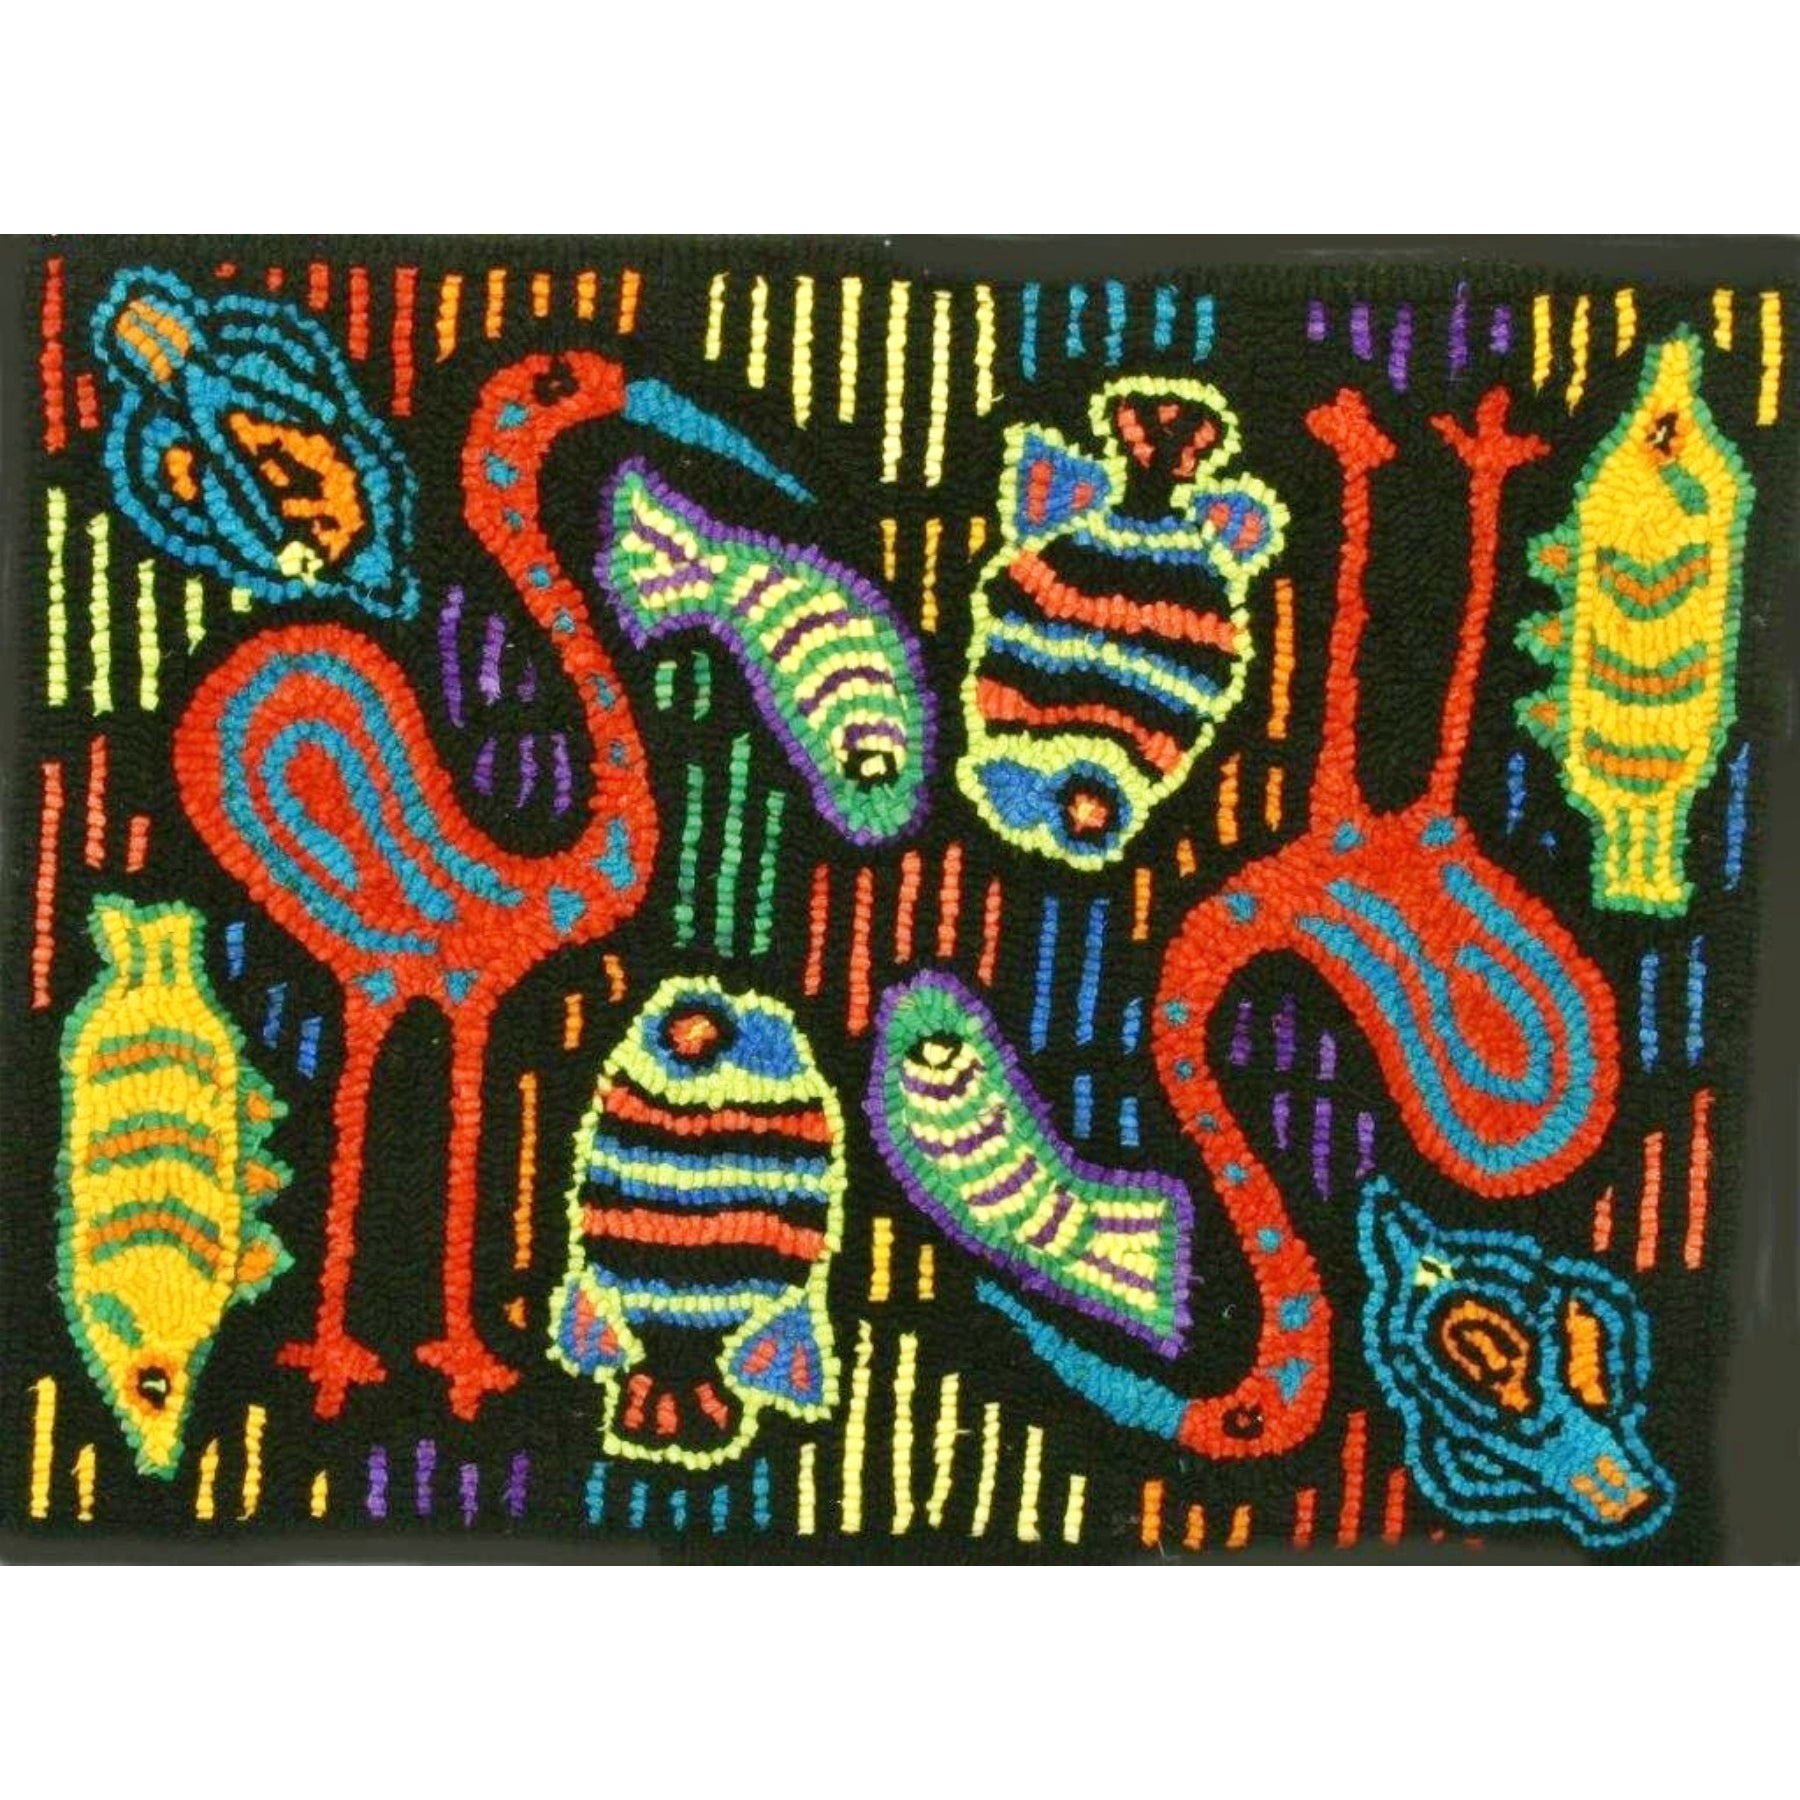 Heron & Fish Mola, rug hooked by Karen Guffey